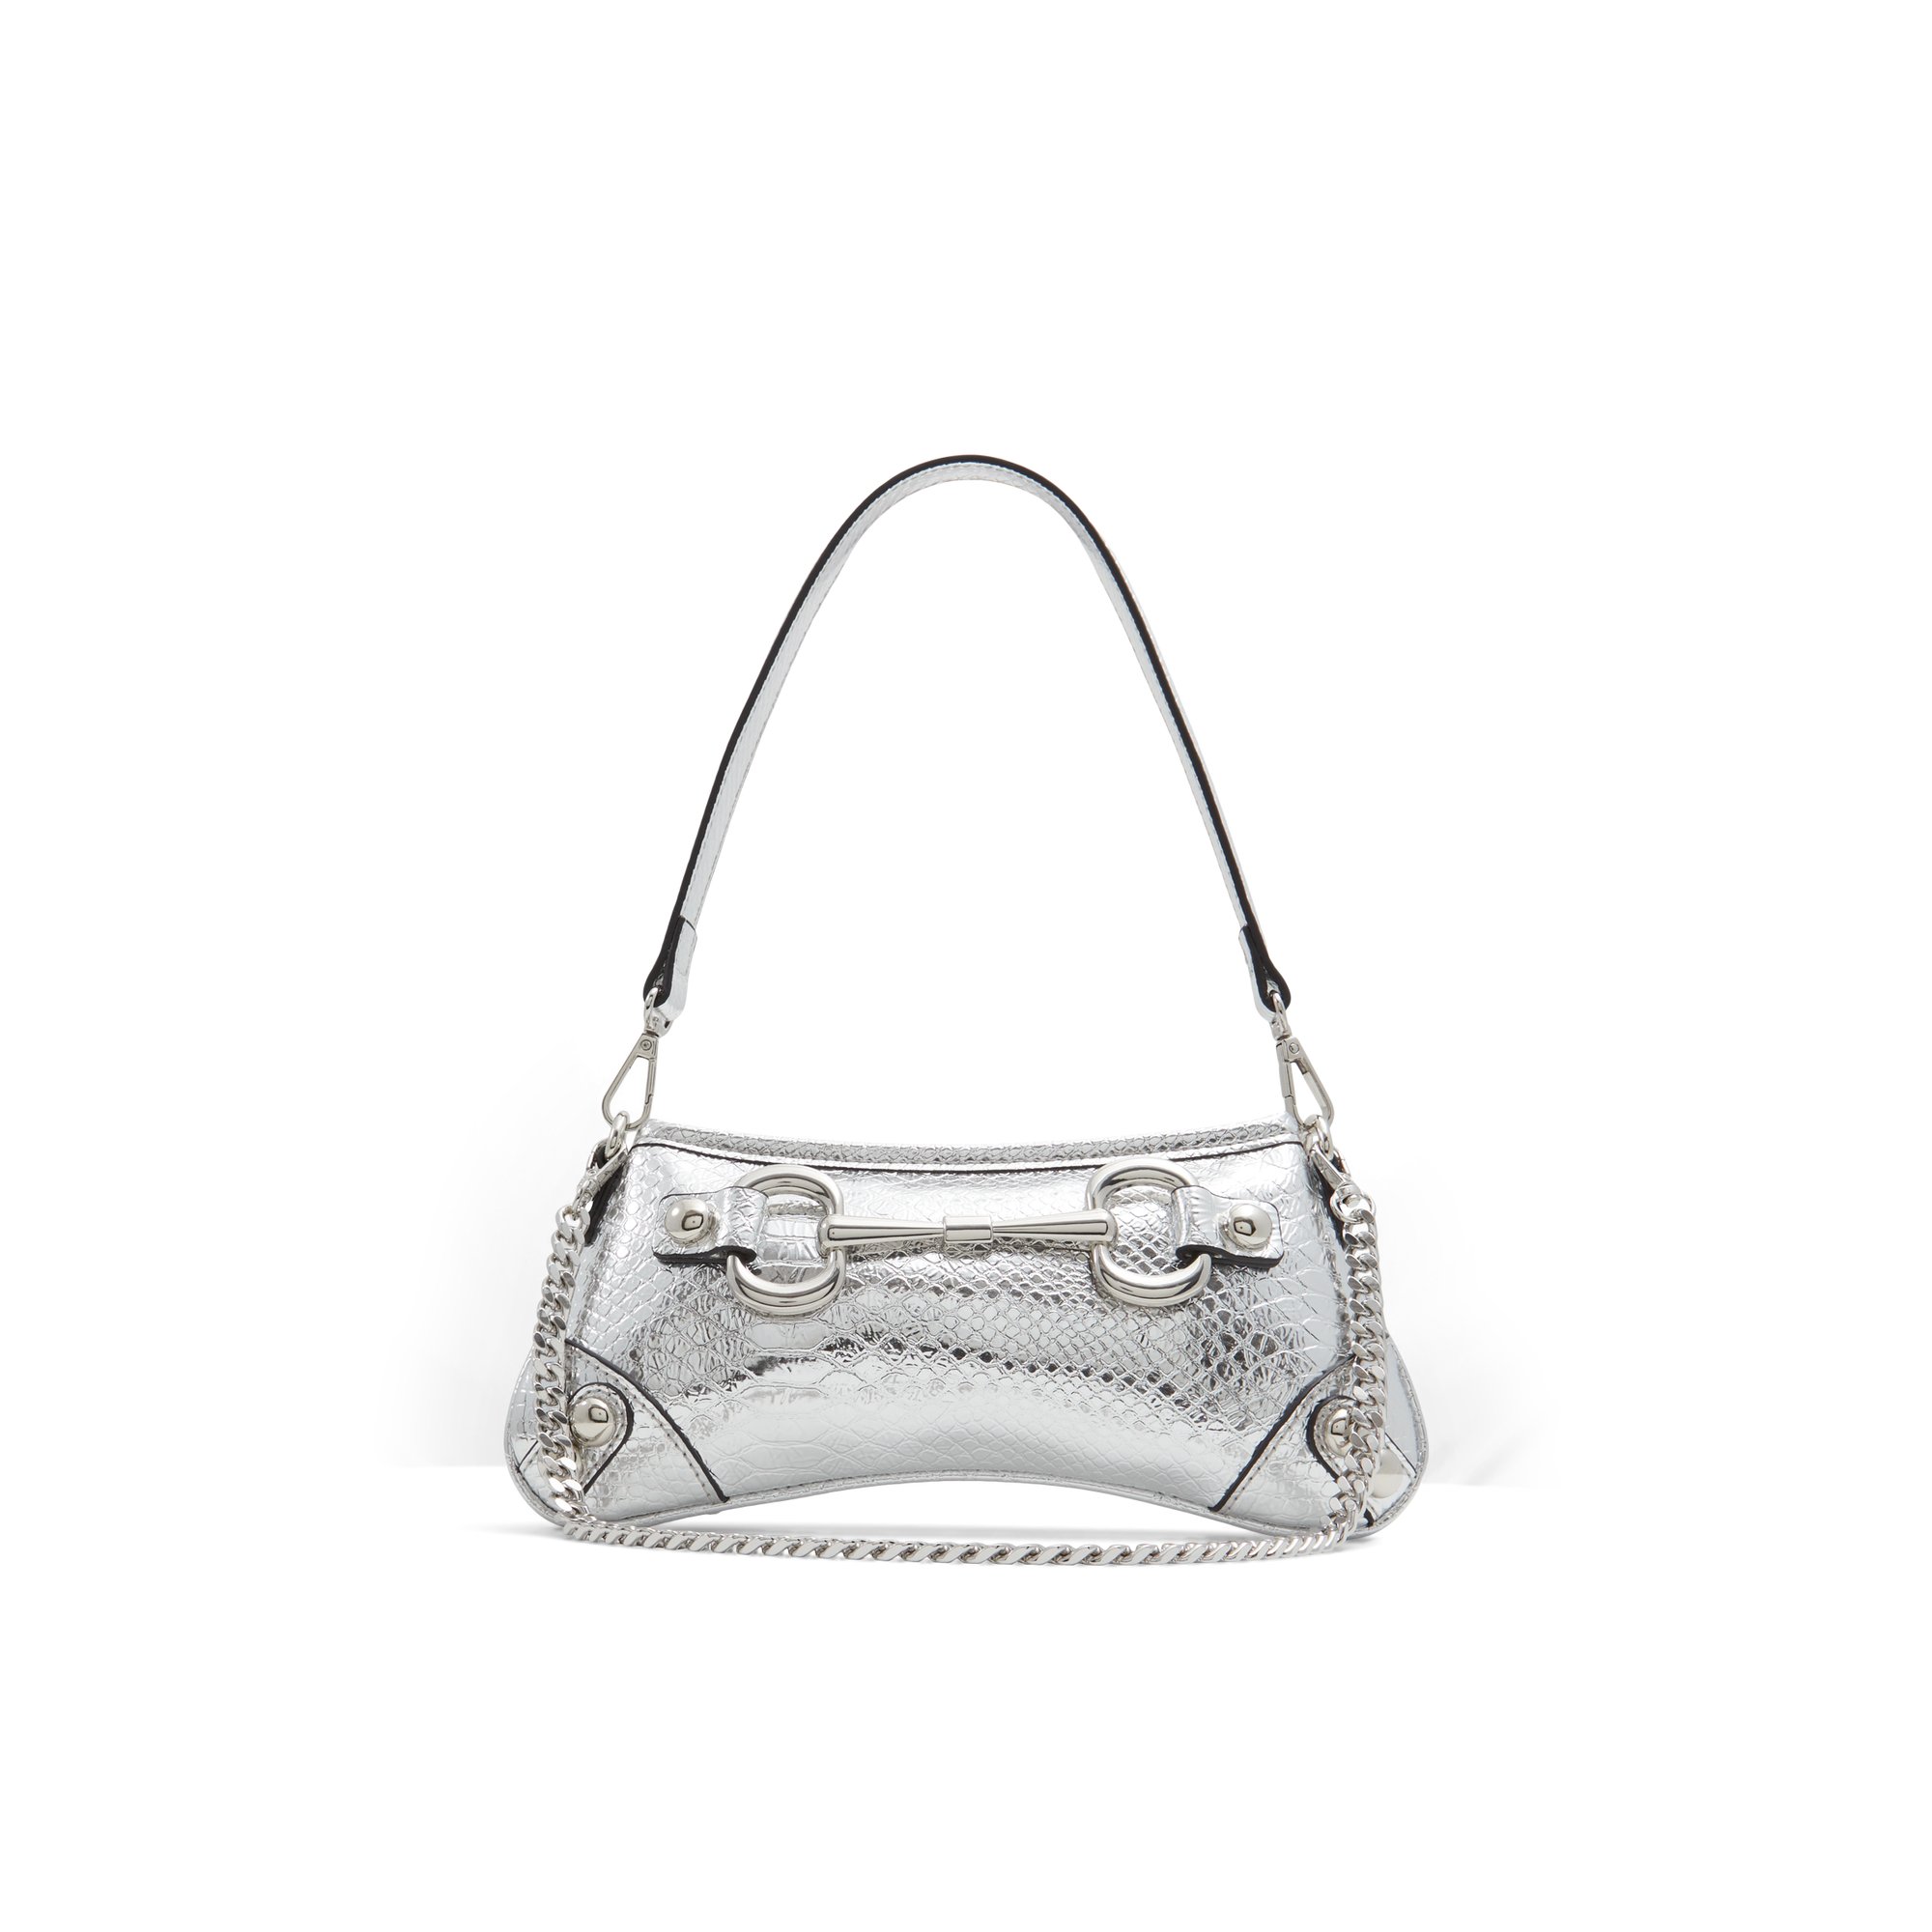 ALDO Madyx - Women's Handbag - Silver